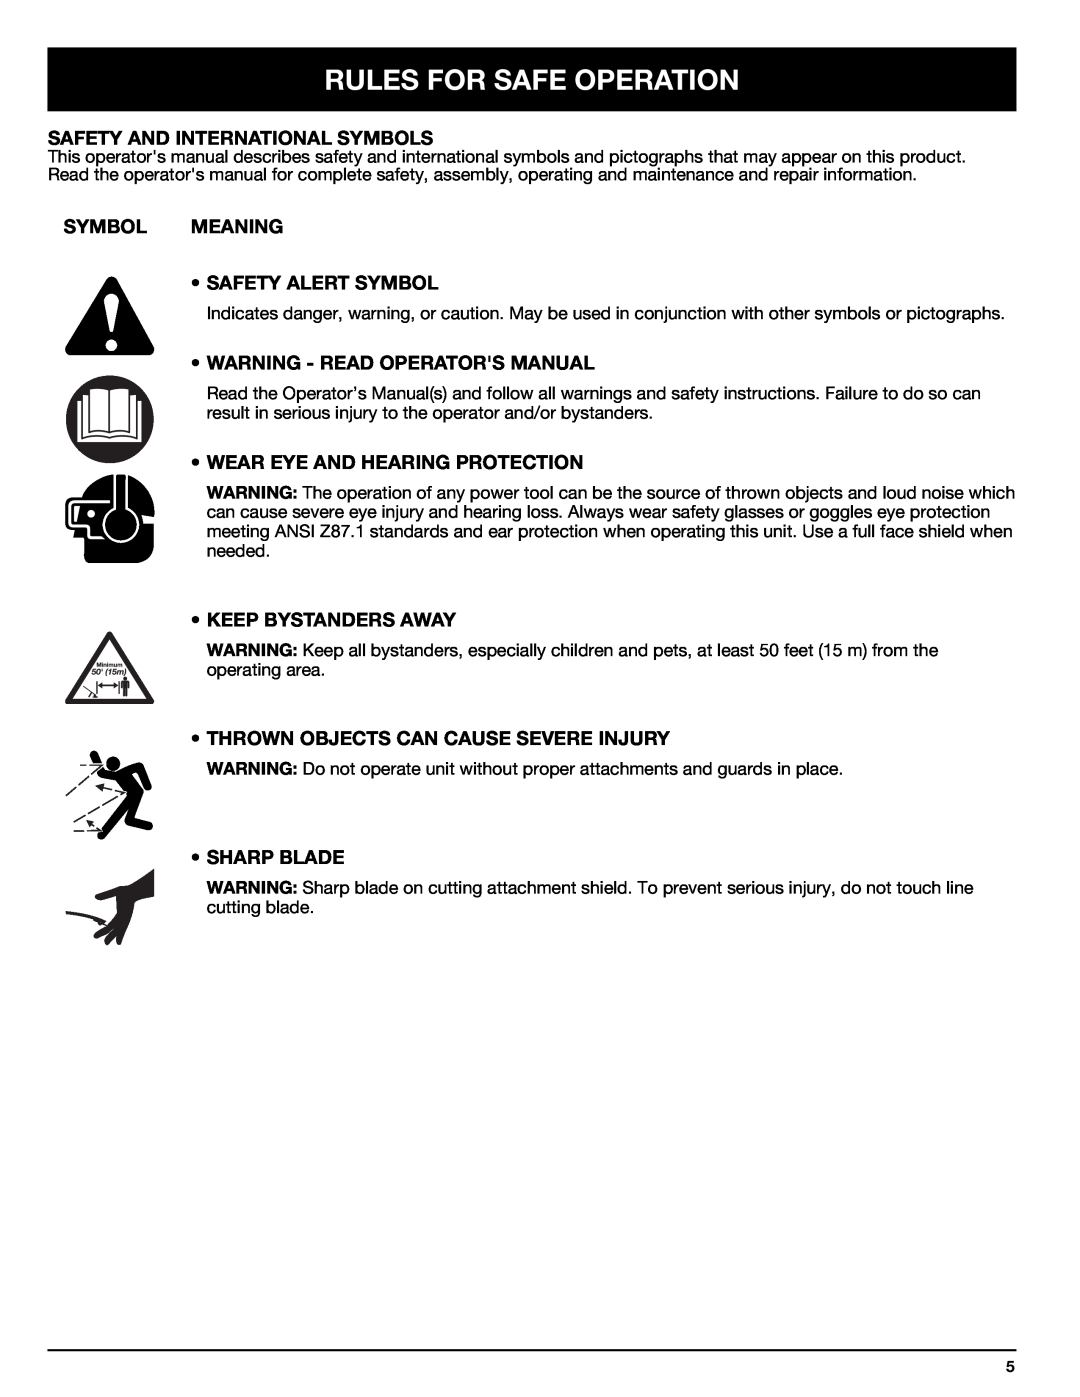 Troy-Bilt 769-00425A Safety And International Symbols, Symbol Meaning Safety Alert Symbol, Warning - Read Operators Manual 